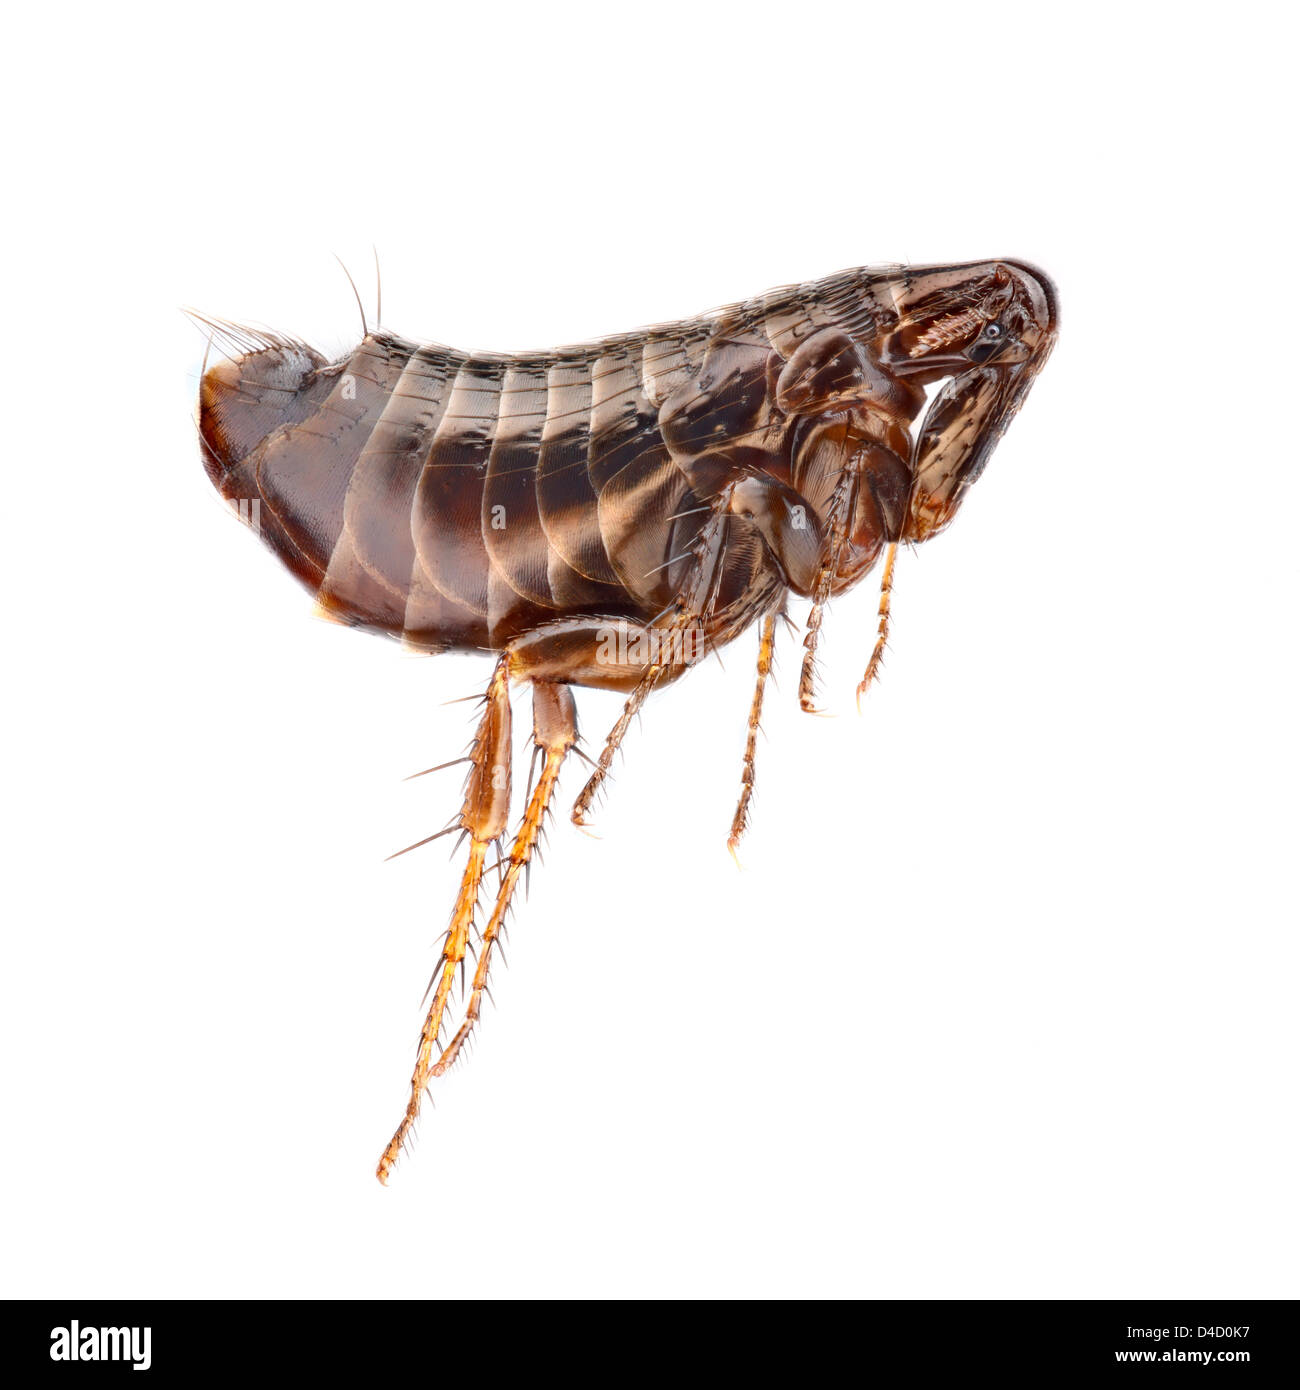 Hen flea (Ceratophyllus gallinae), extreme close-up Stock Photo